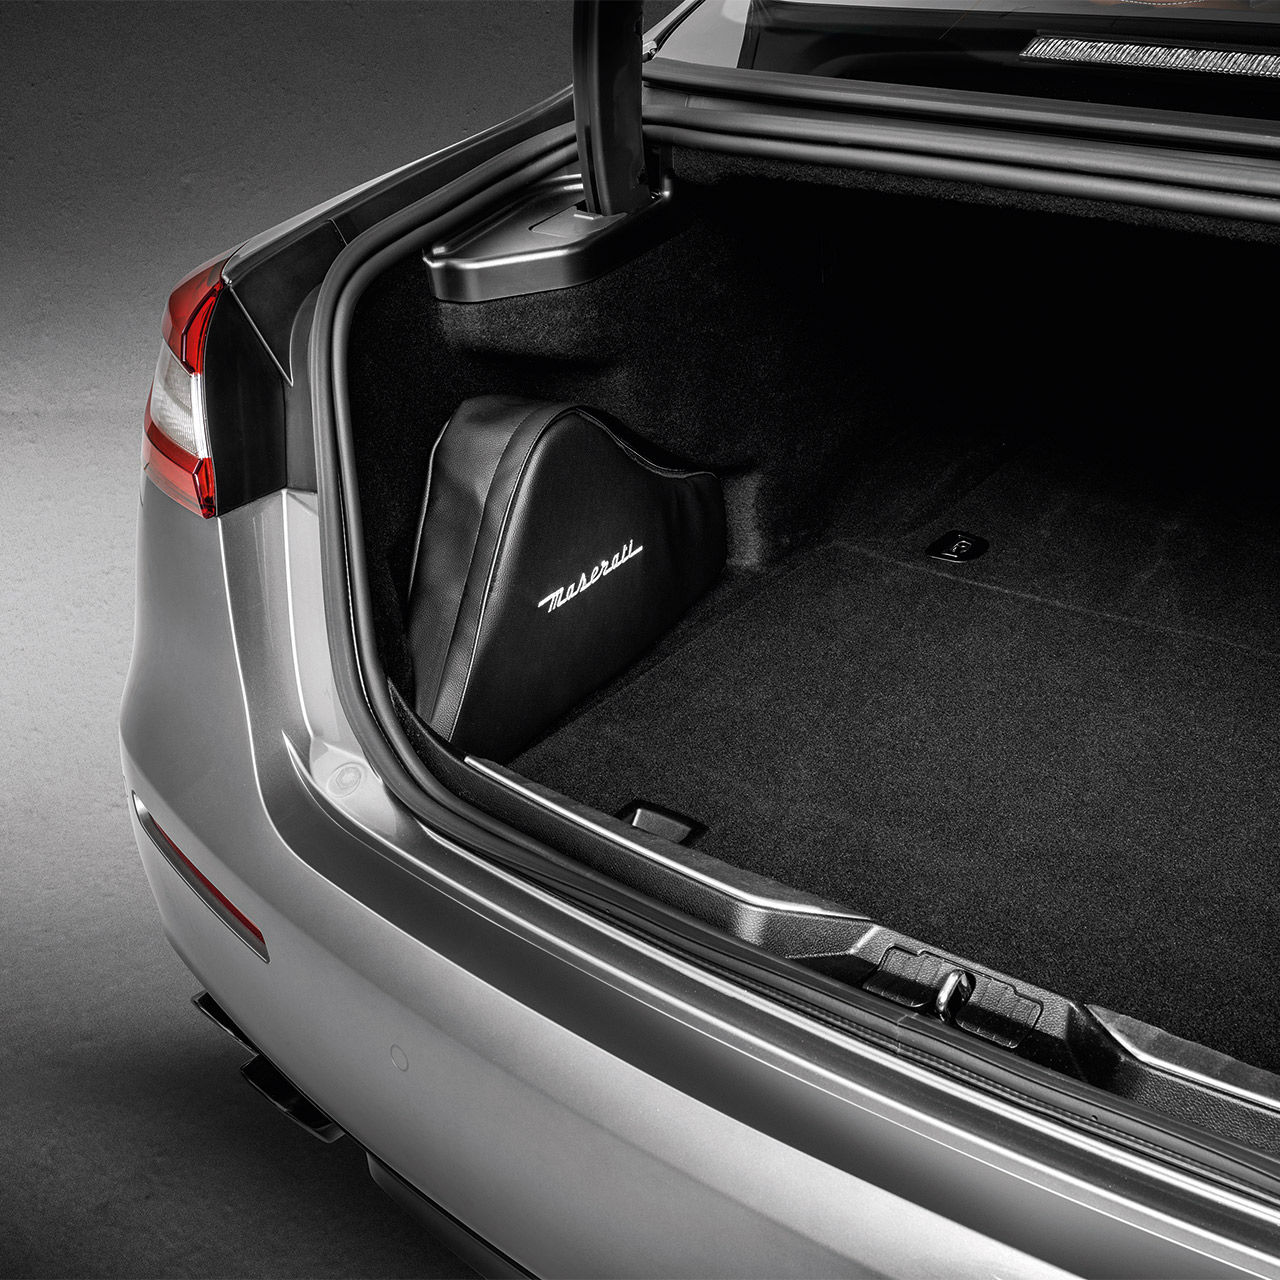 Emergency kit inside the trunk of Maserati Quattroporte